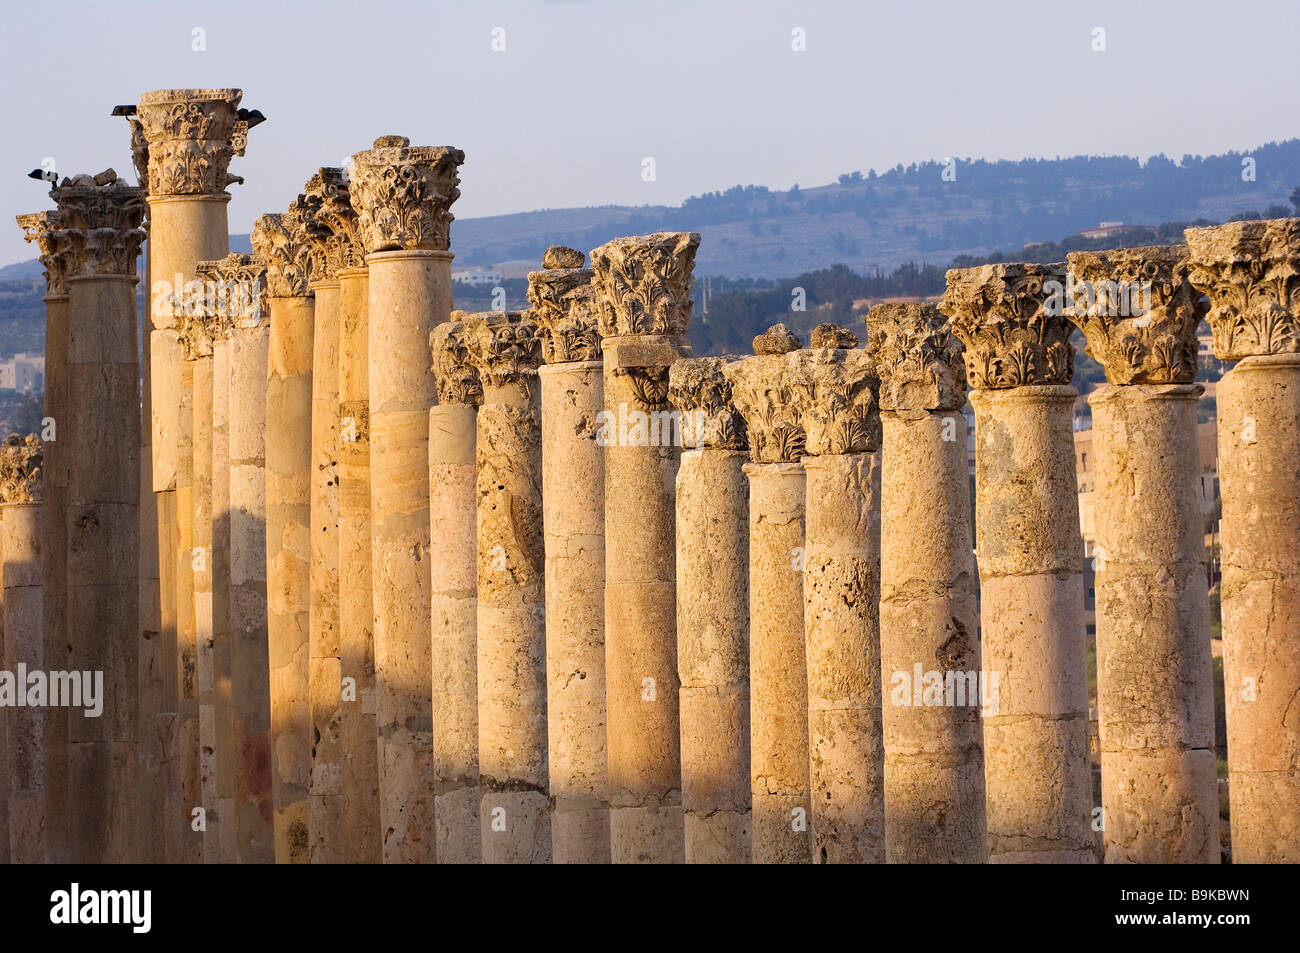 Jordan, Jerash Governorate, antique site of Jerash, Cardo Maximus, Corinthian columns with acantus leaves Stock Photo